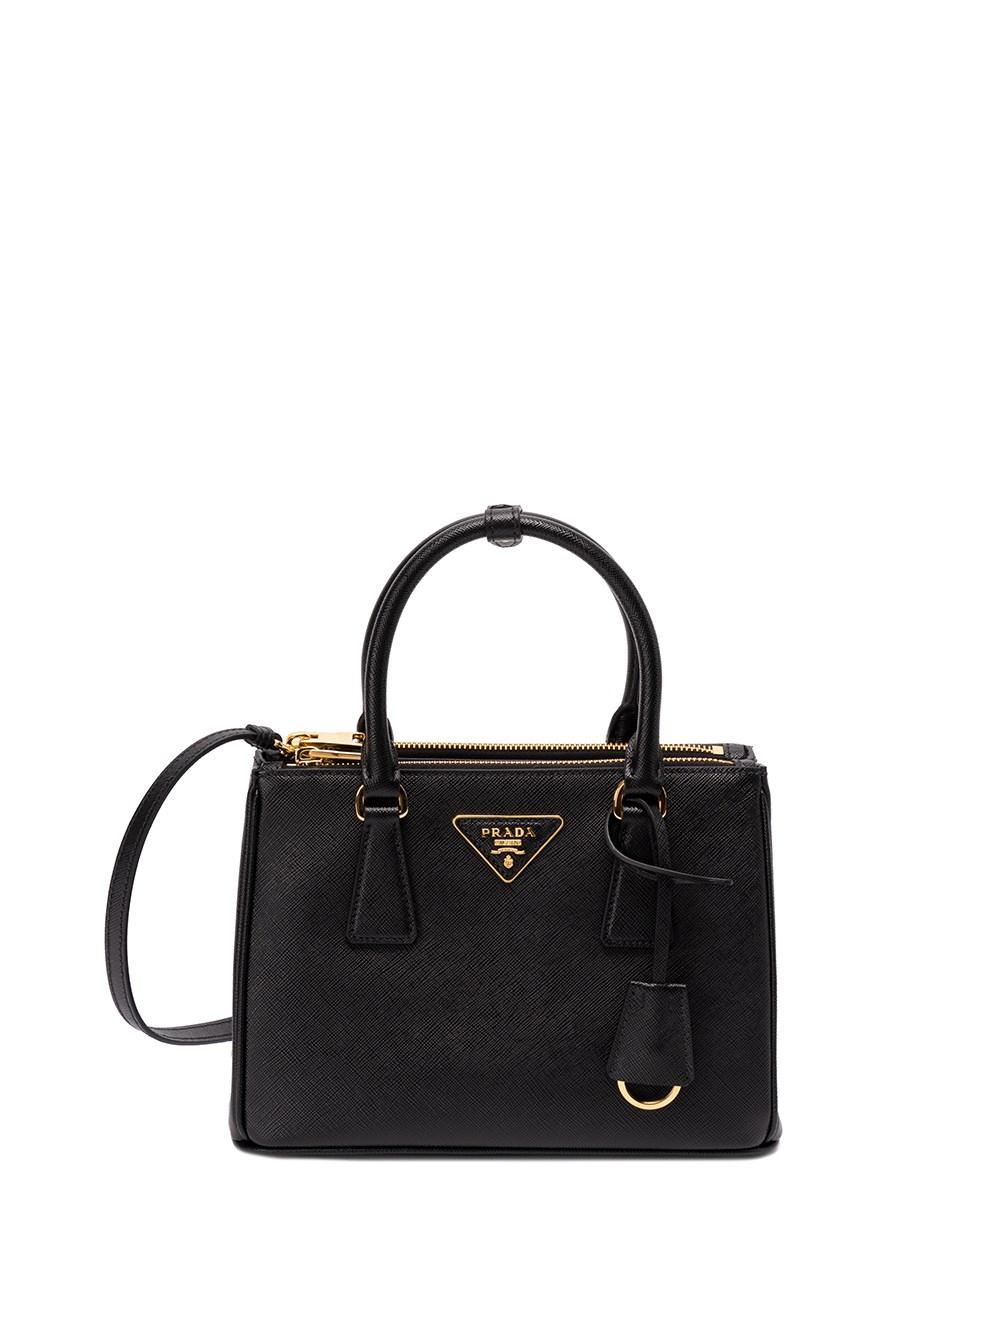 Shop Prada Small Saffiano Leather Brique Bag | Saks Fifth Avenue